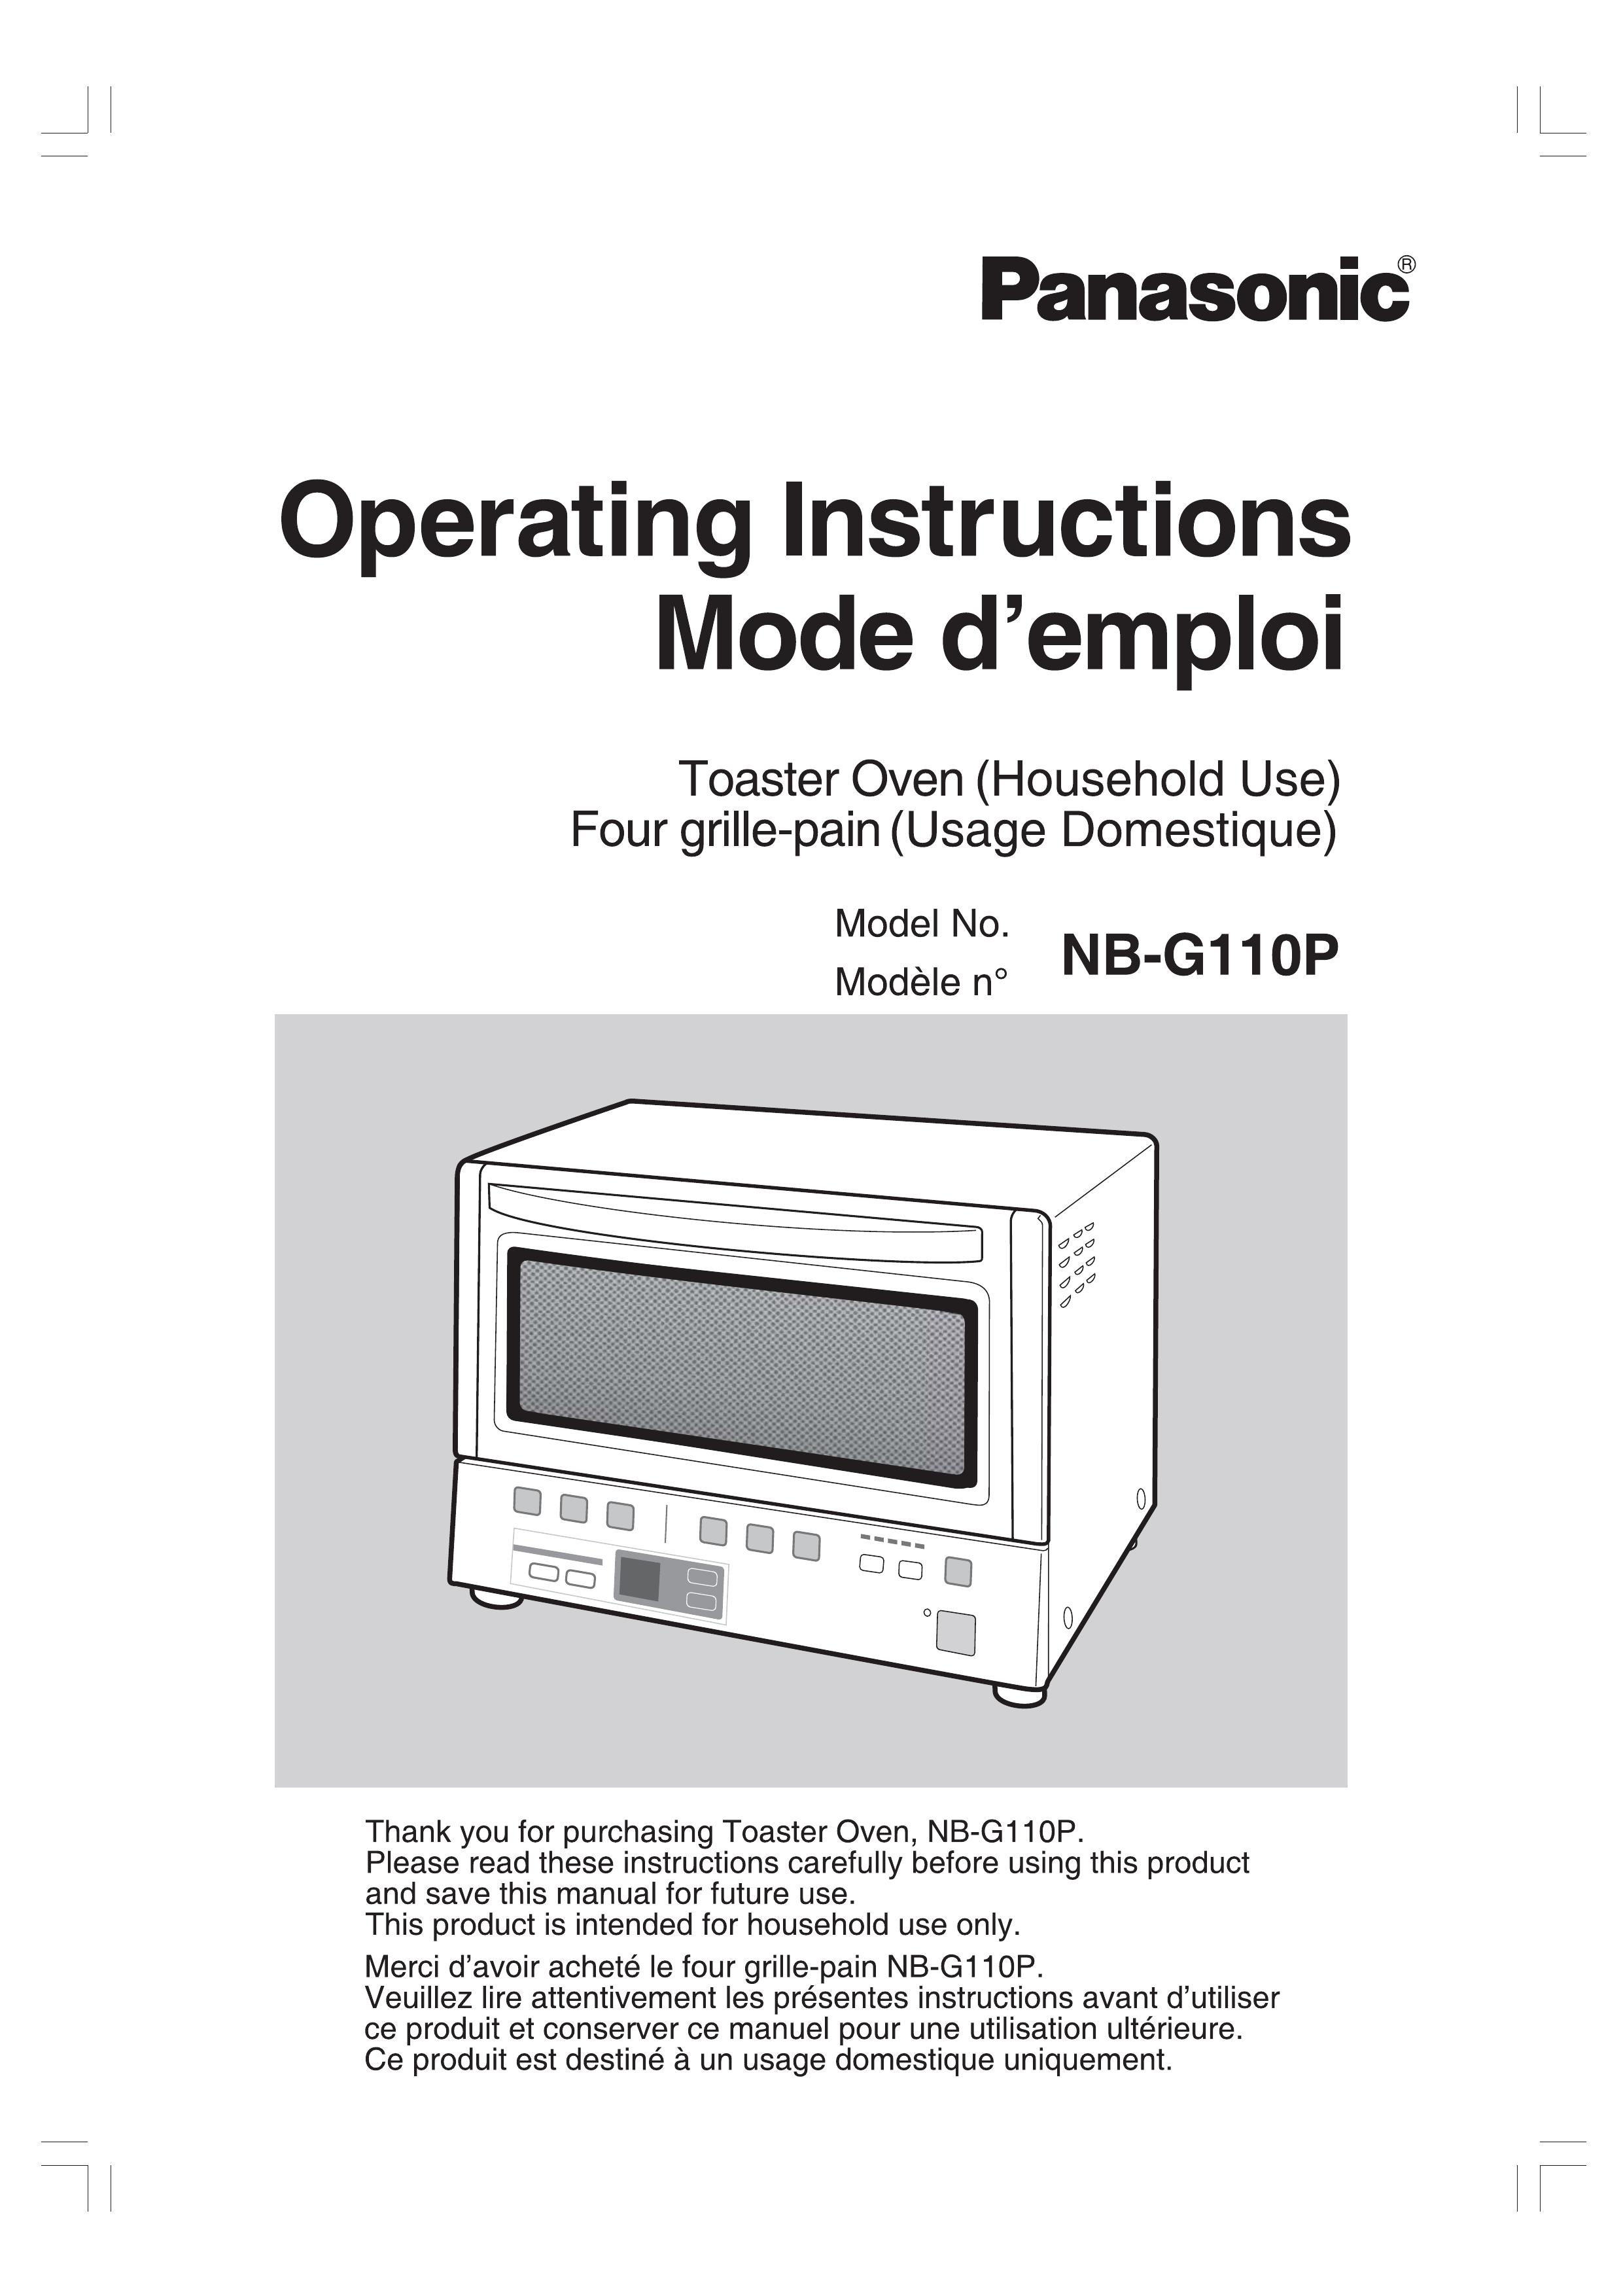 Panasonic NBG110P Toaster User Manual